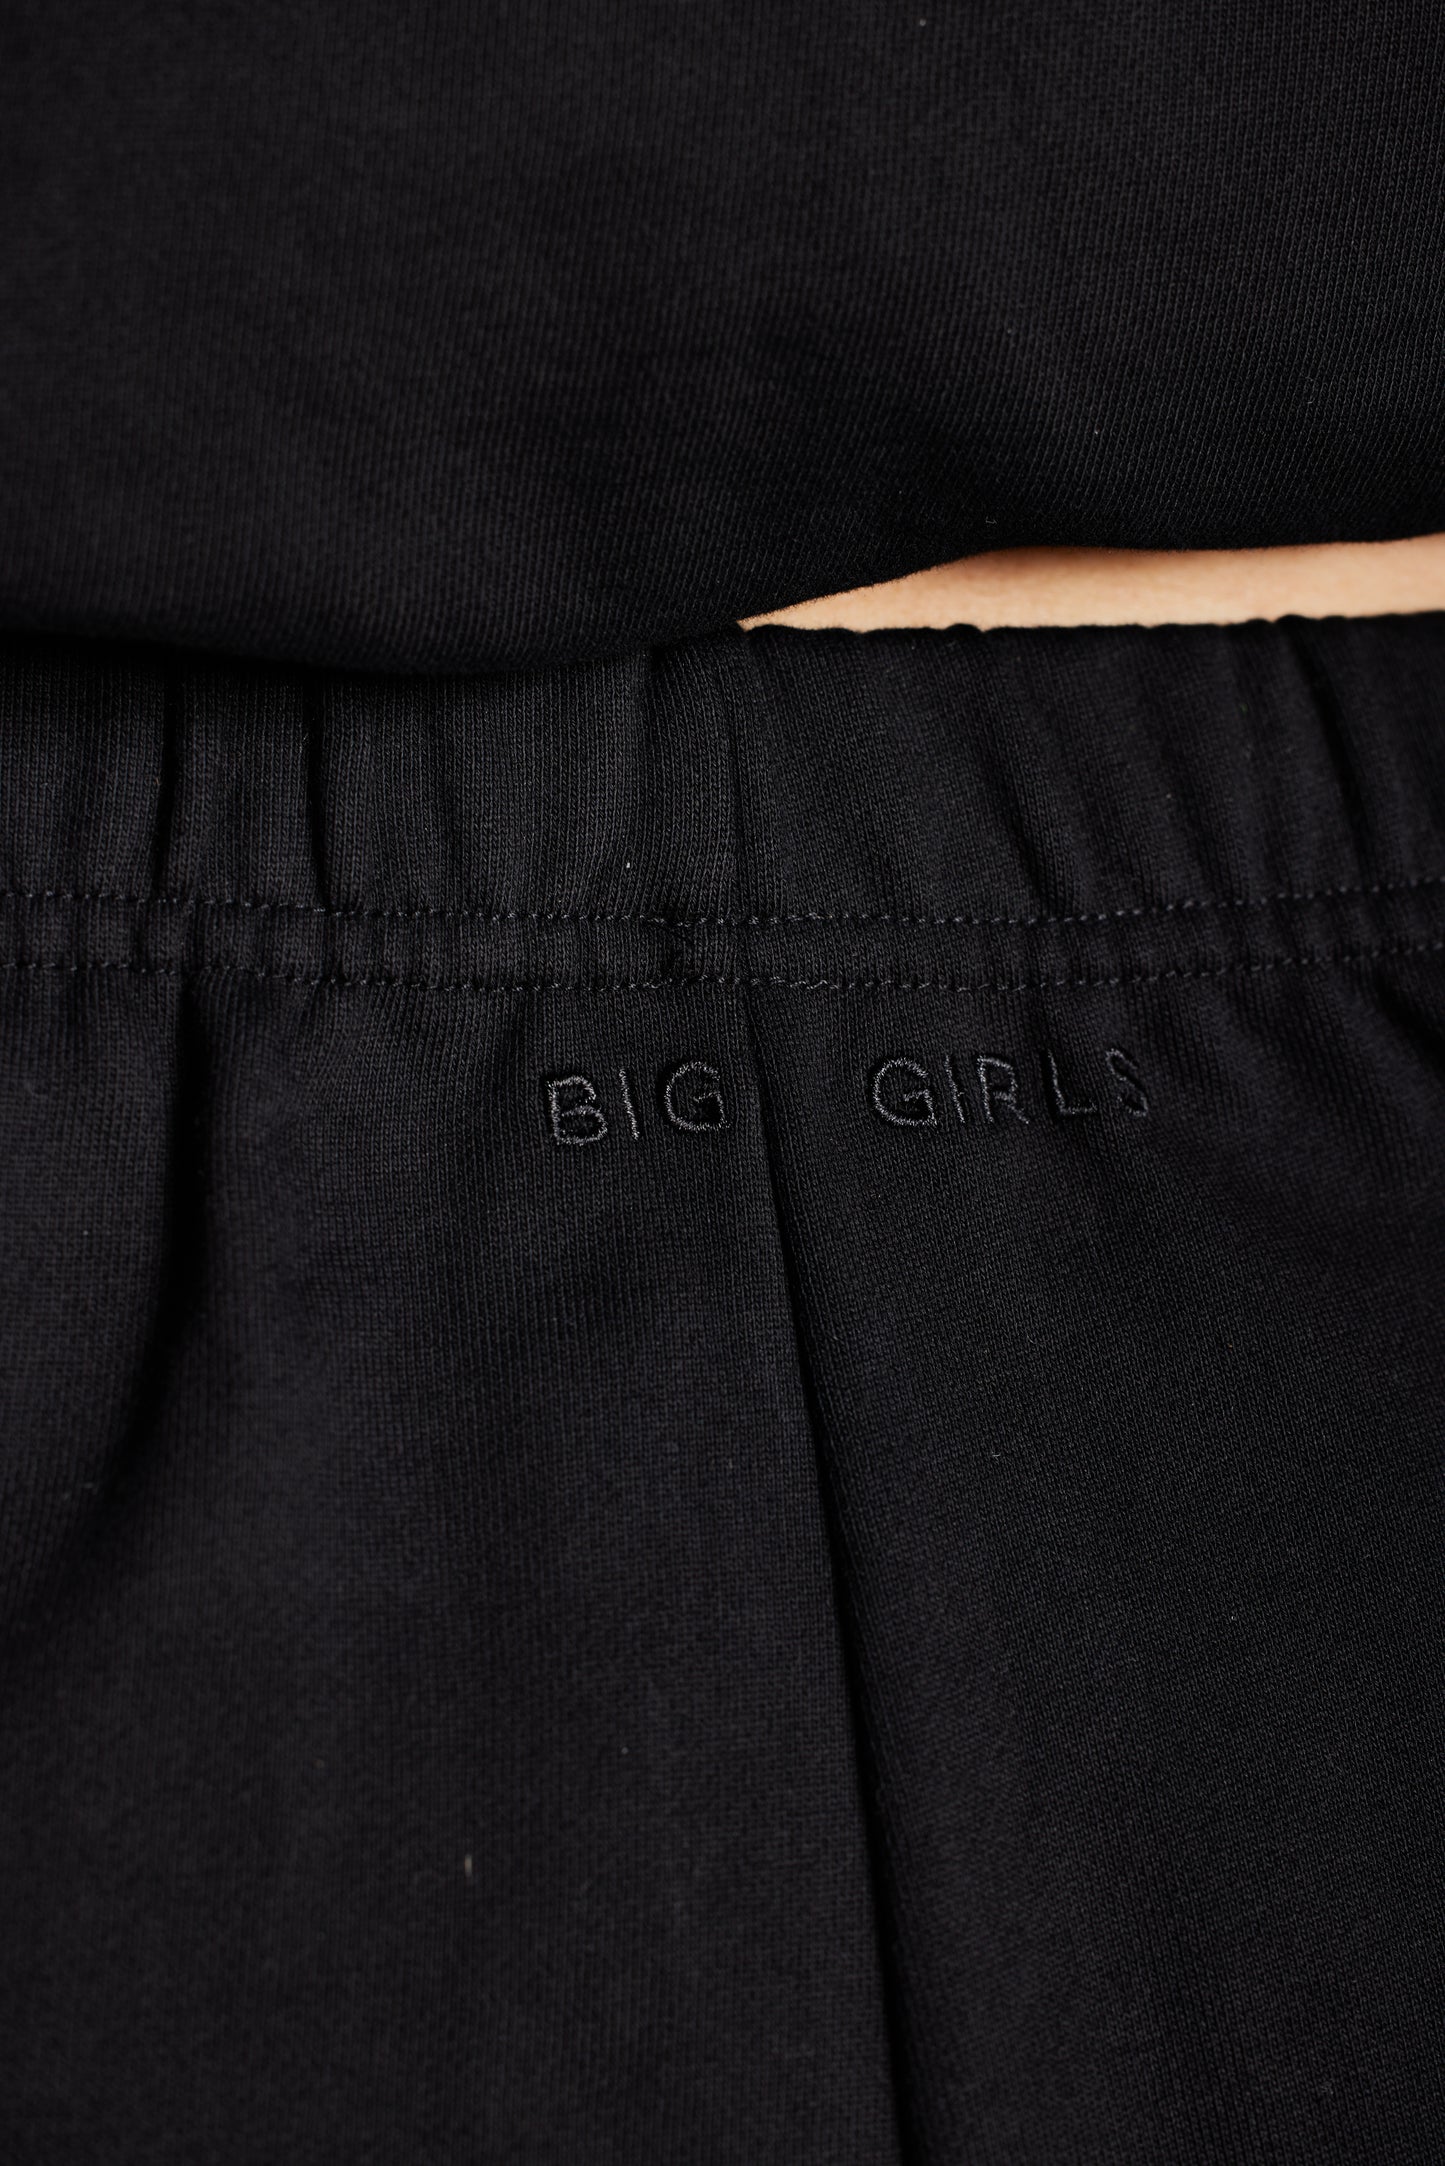 Big Girls Embroidered Sweatpants